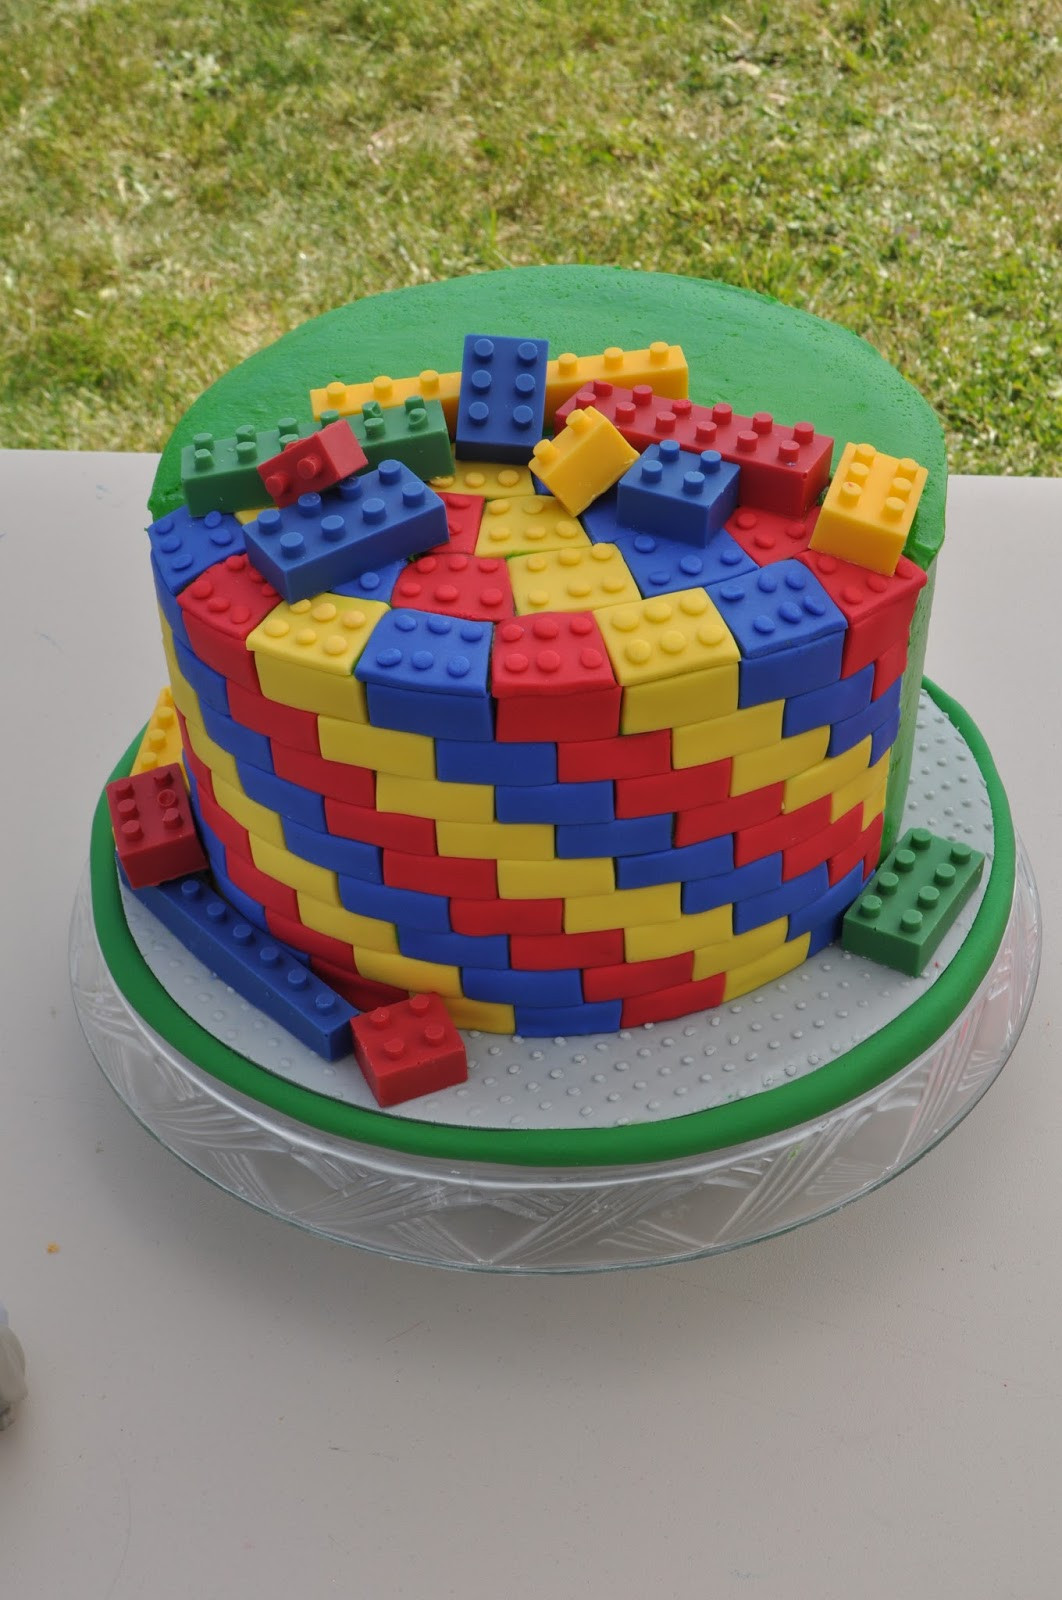 Lego Birthday Cakes
 PEACH OF CAKE Lego Birthday Cake